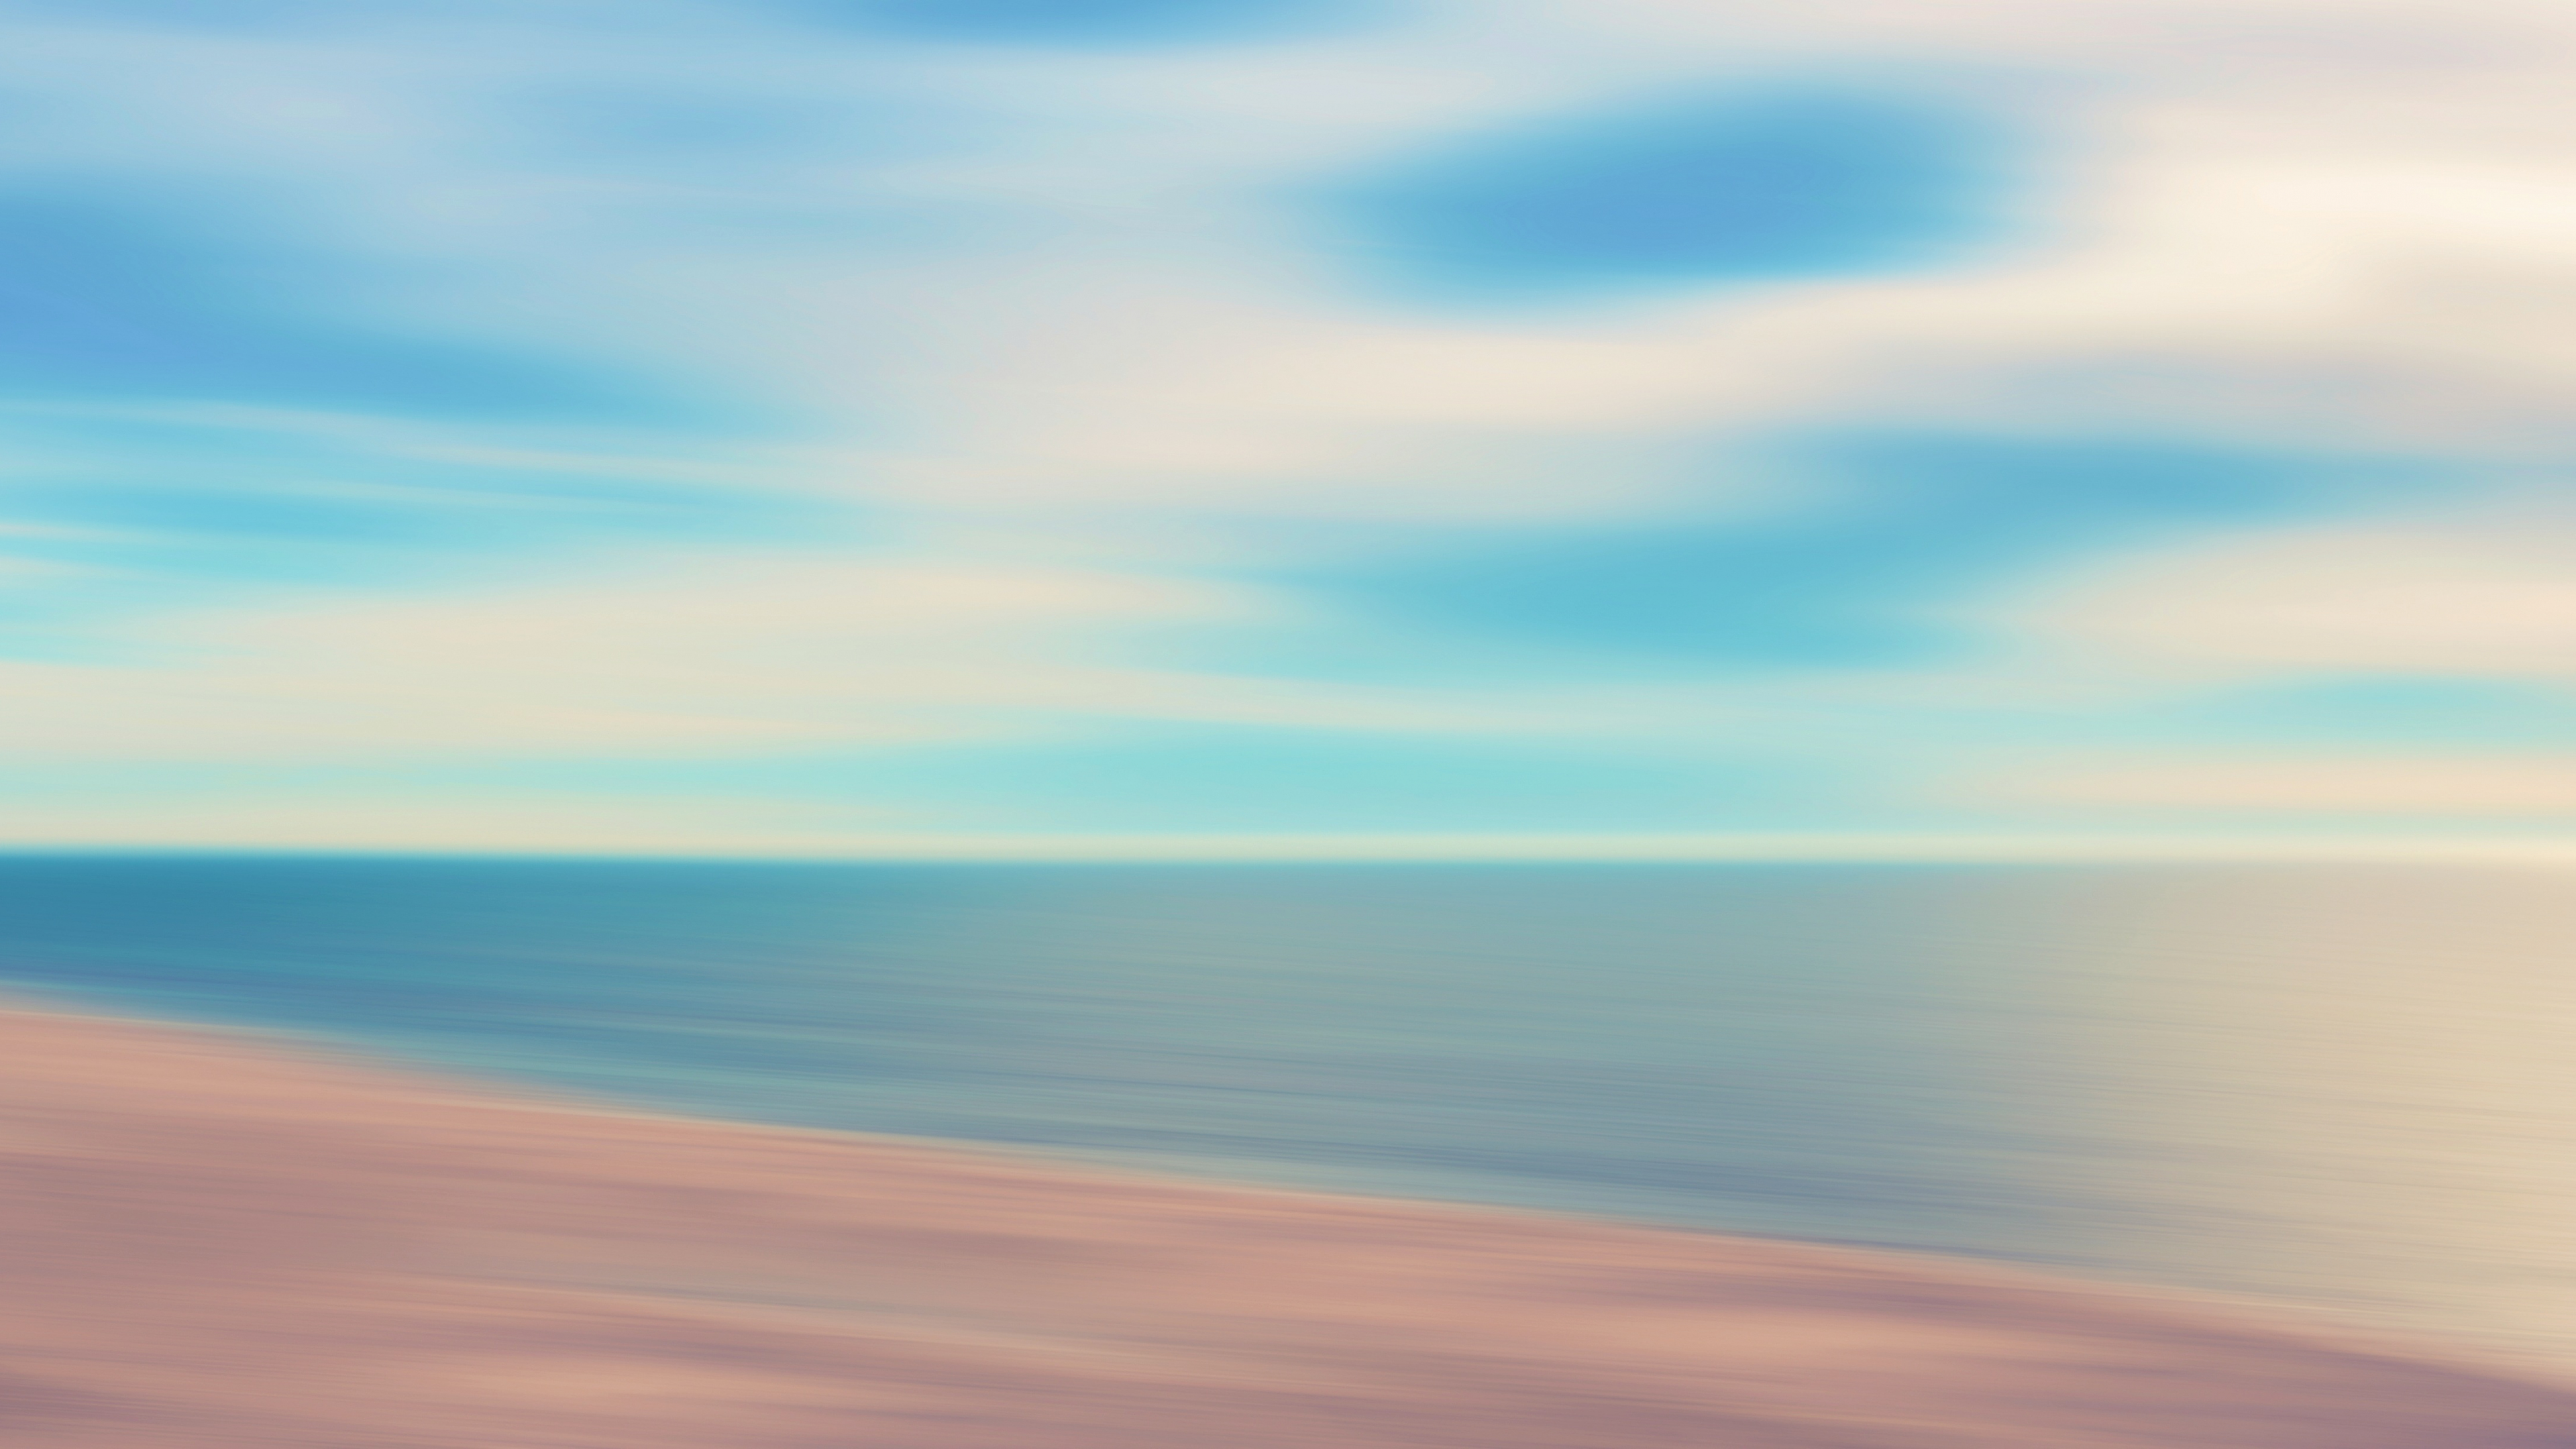 Download 3840x2160 wallpaper north sea, beach, blur, 4k, uhd 16: widescreen, 3840x2160 HD image, background, 18930